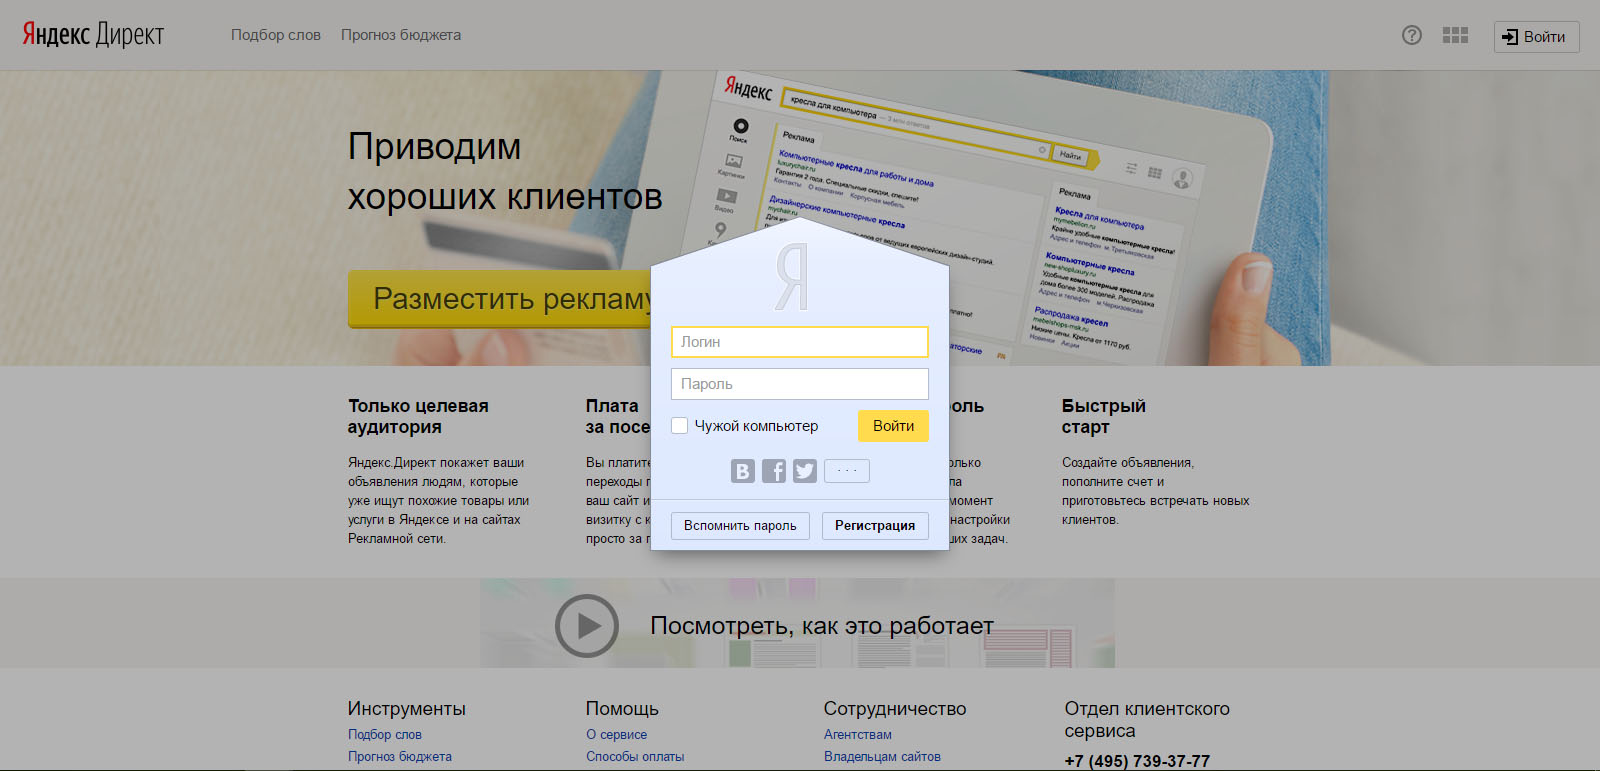 Личный кабинет Яндекс Директа